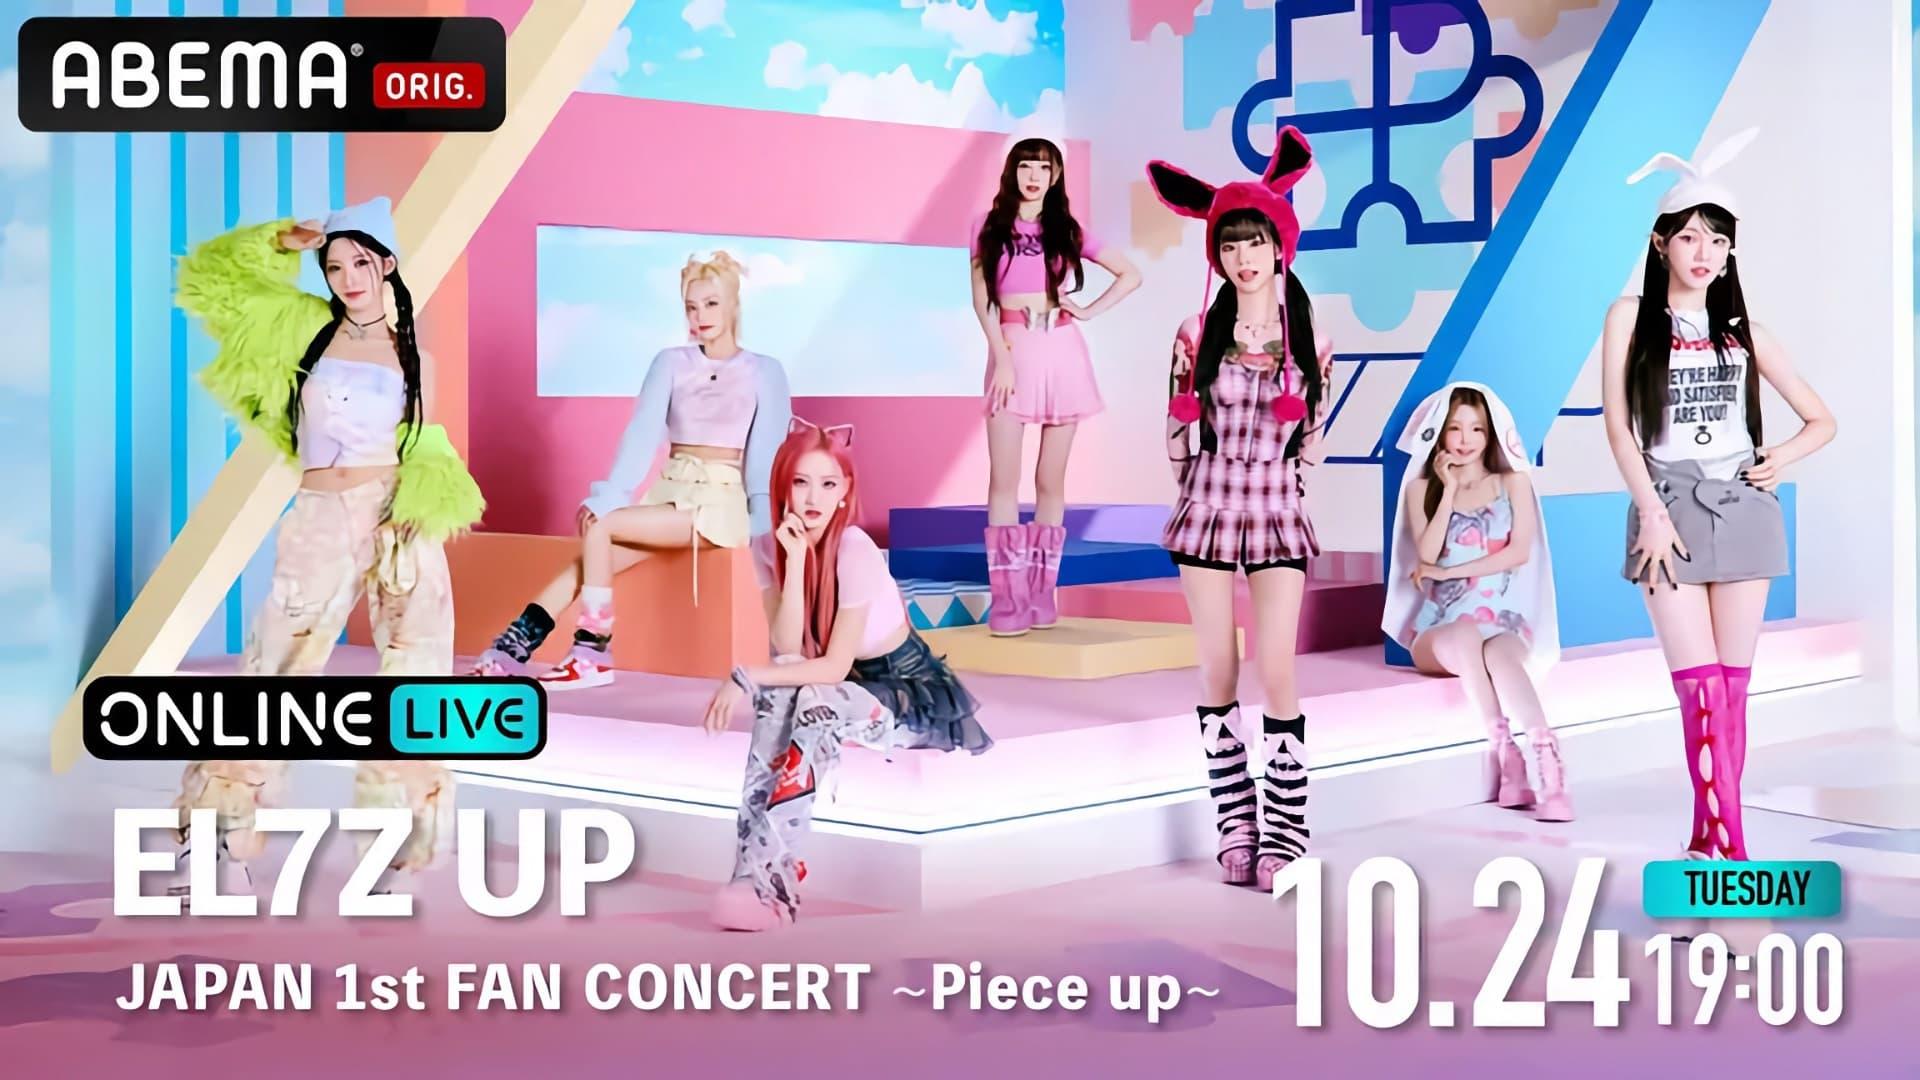 EL7Z UP - Japan 1st Fan Concert 'Piece Up' backdrop